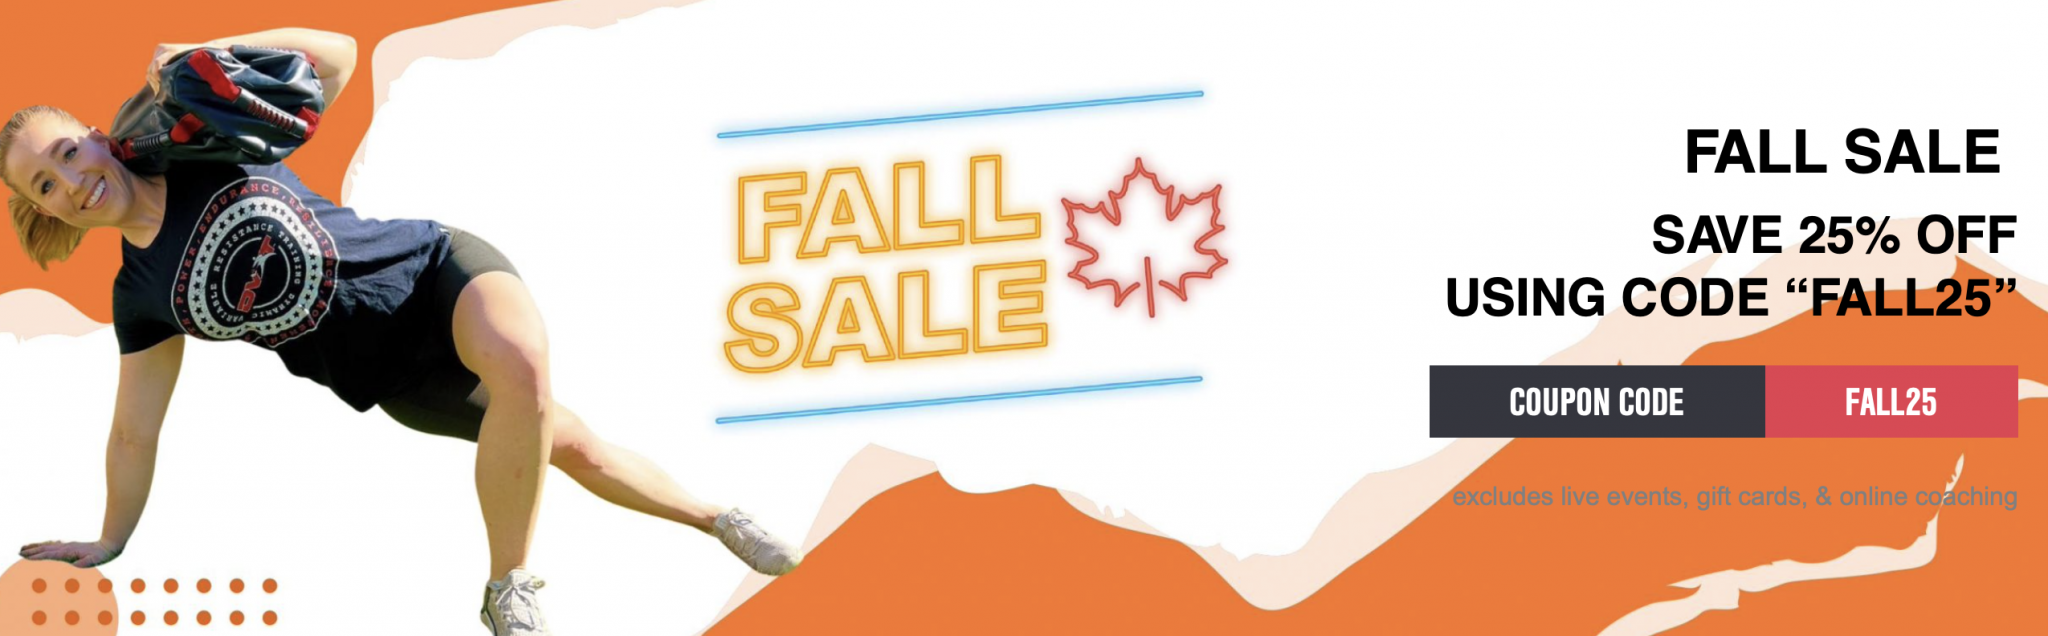 25% off fall sale